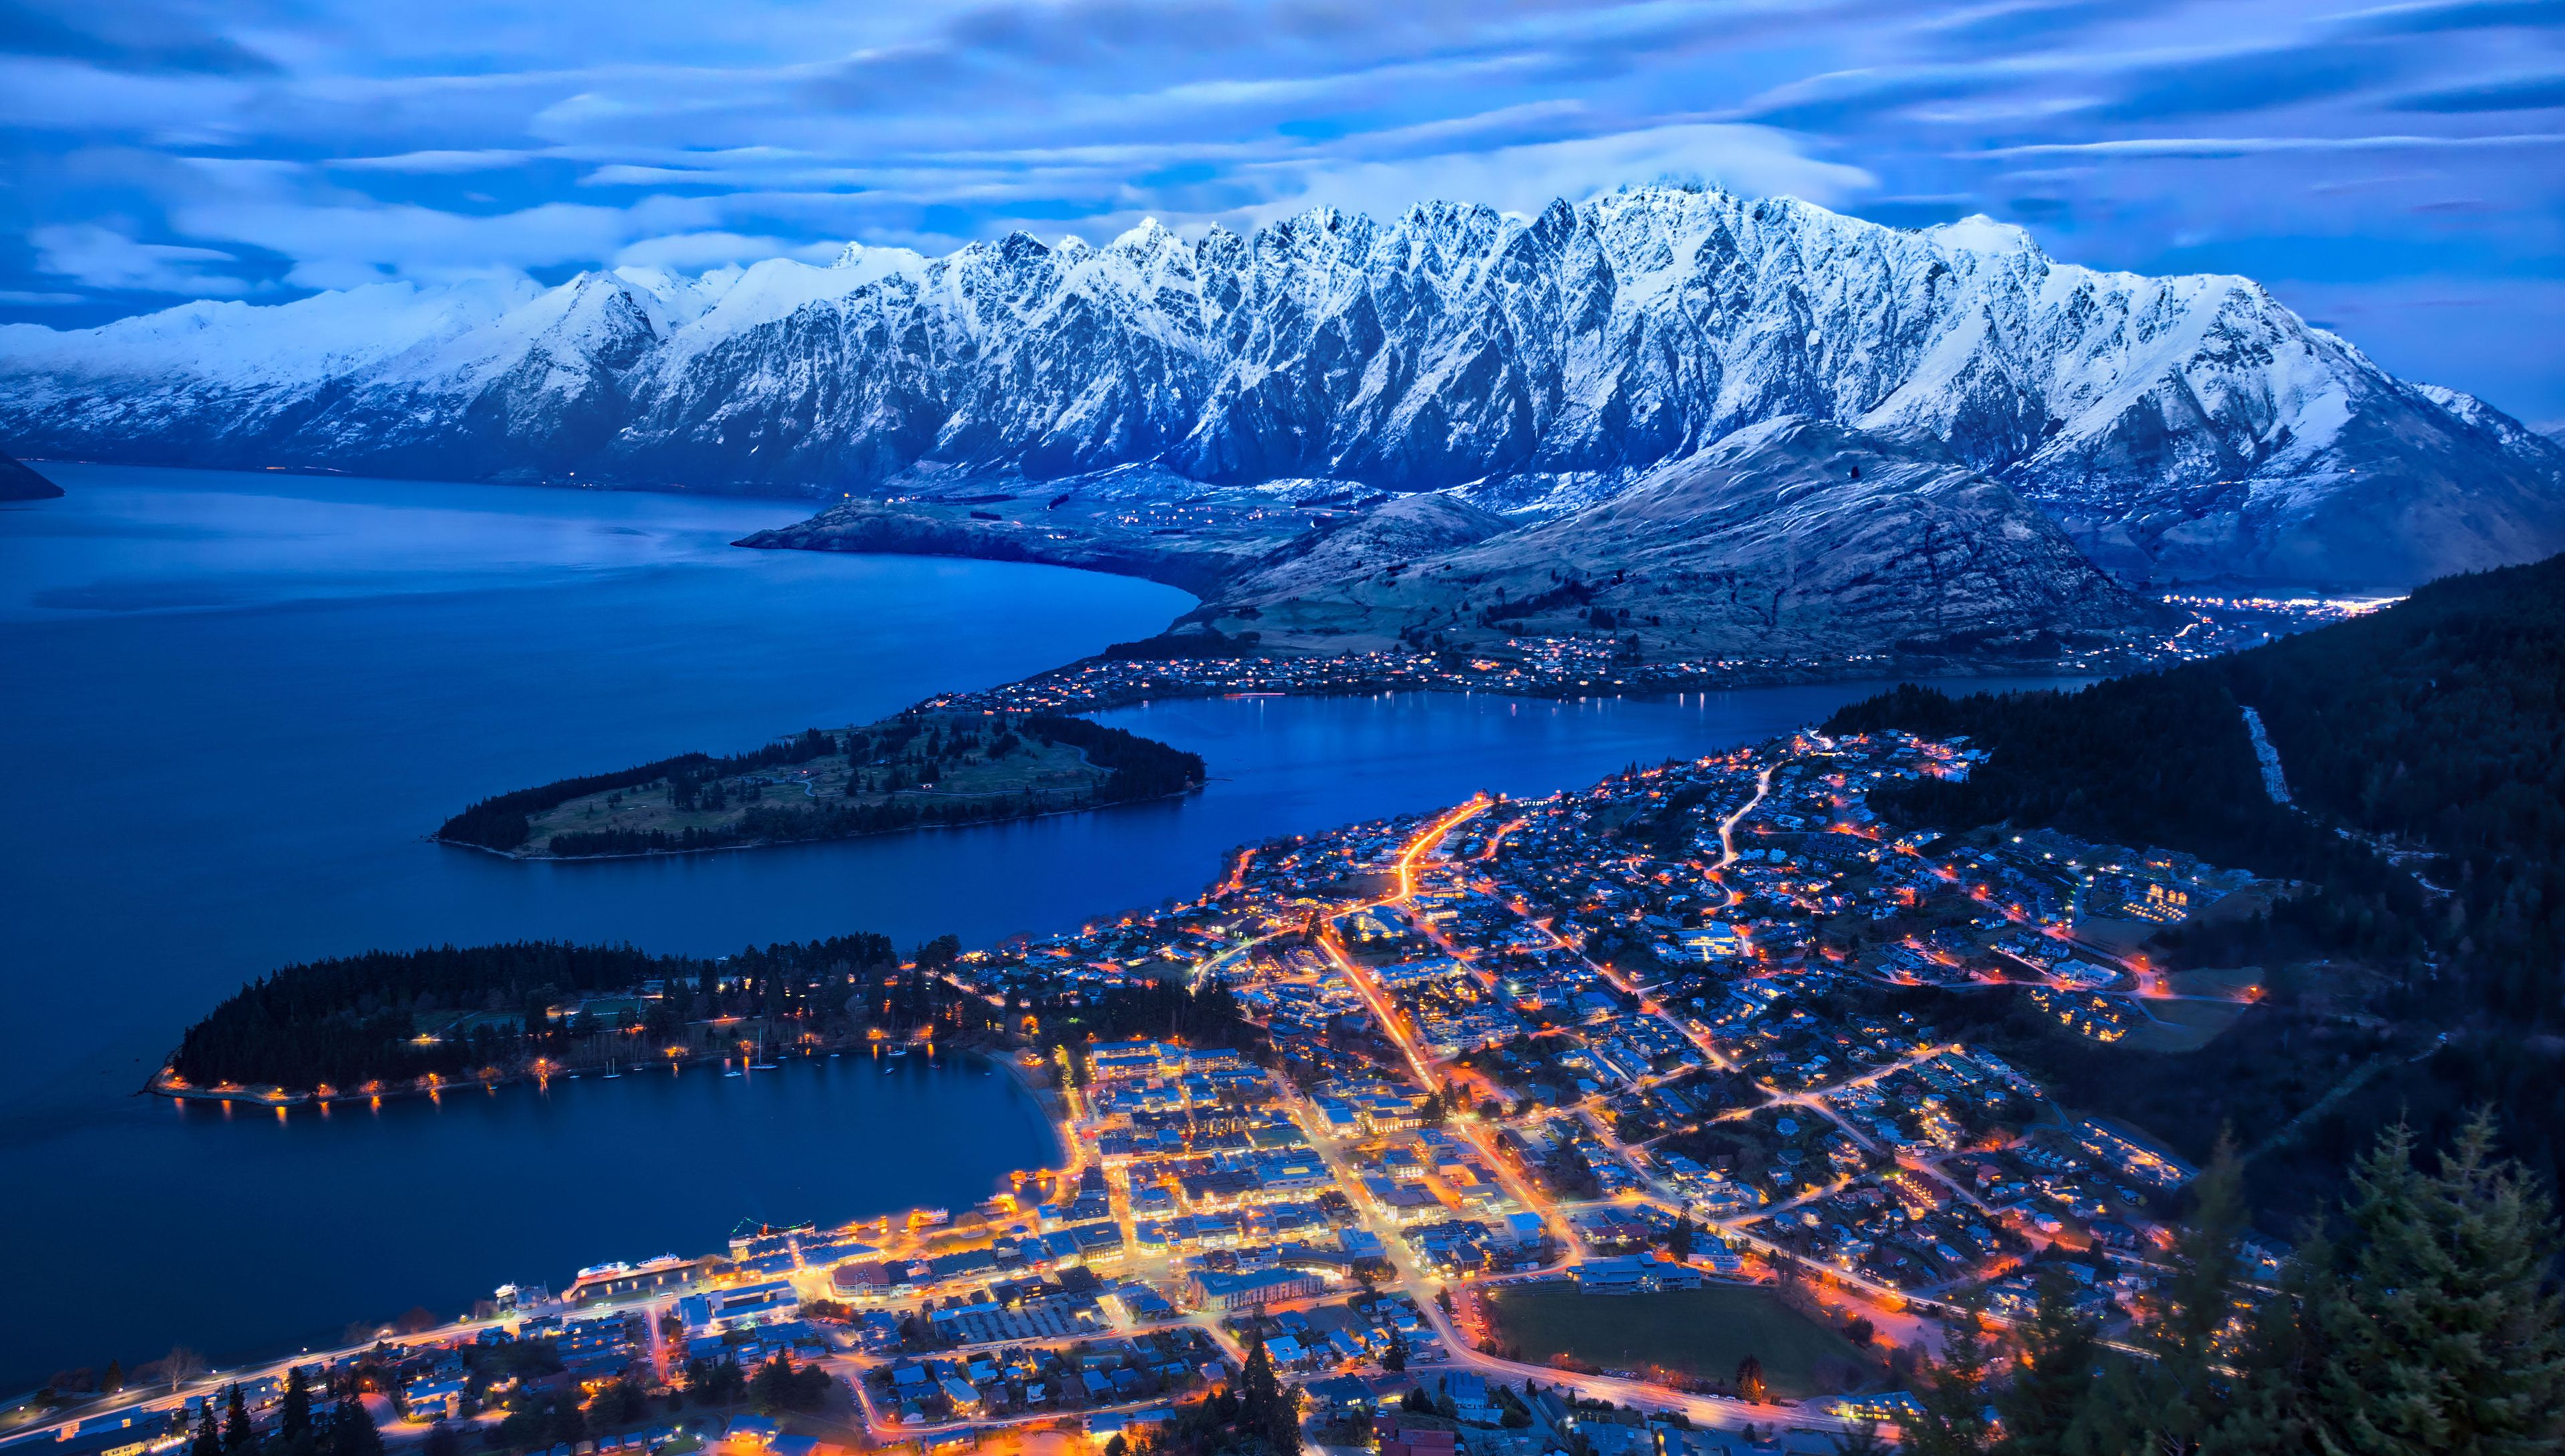 New Zealand, Snow mountains, Cityscape, Night lights, Blue Sky, Clouds, 4k Free deskk wallpaper, Ultra HD